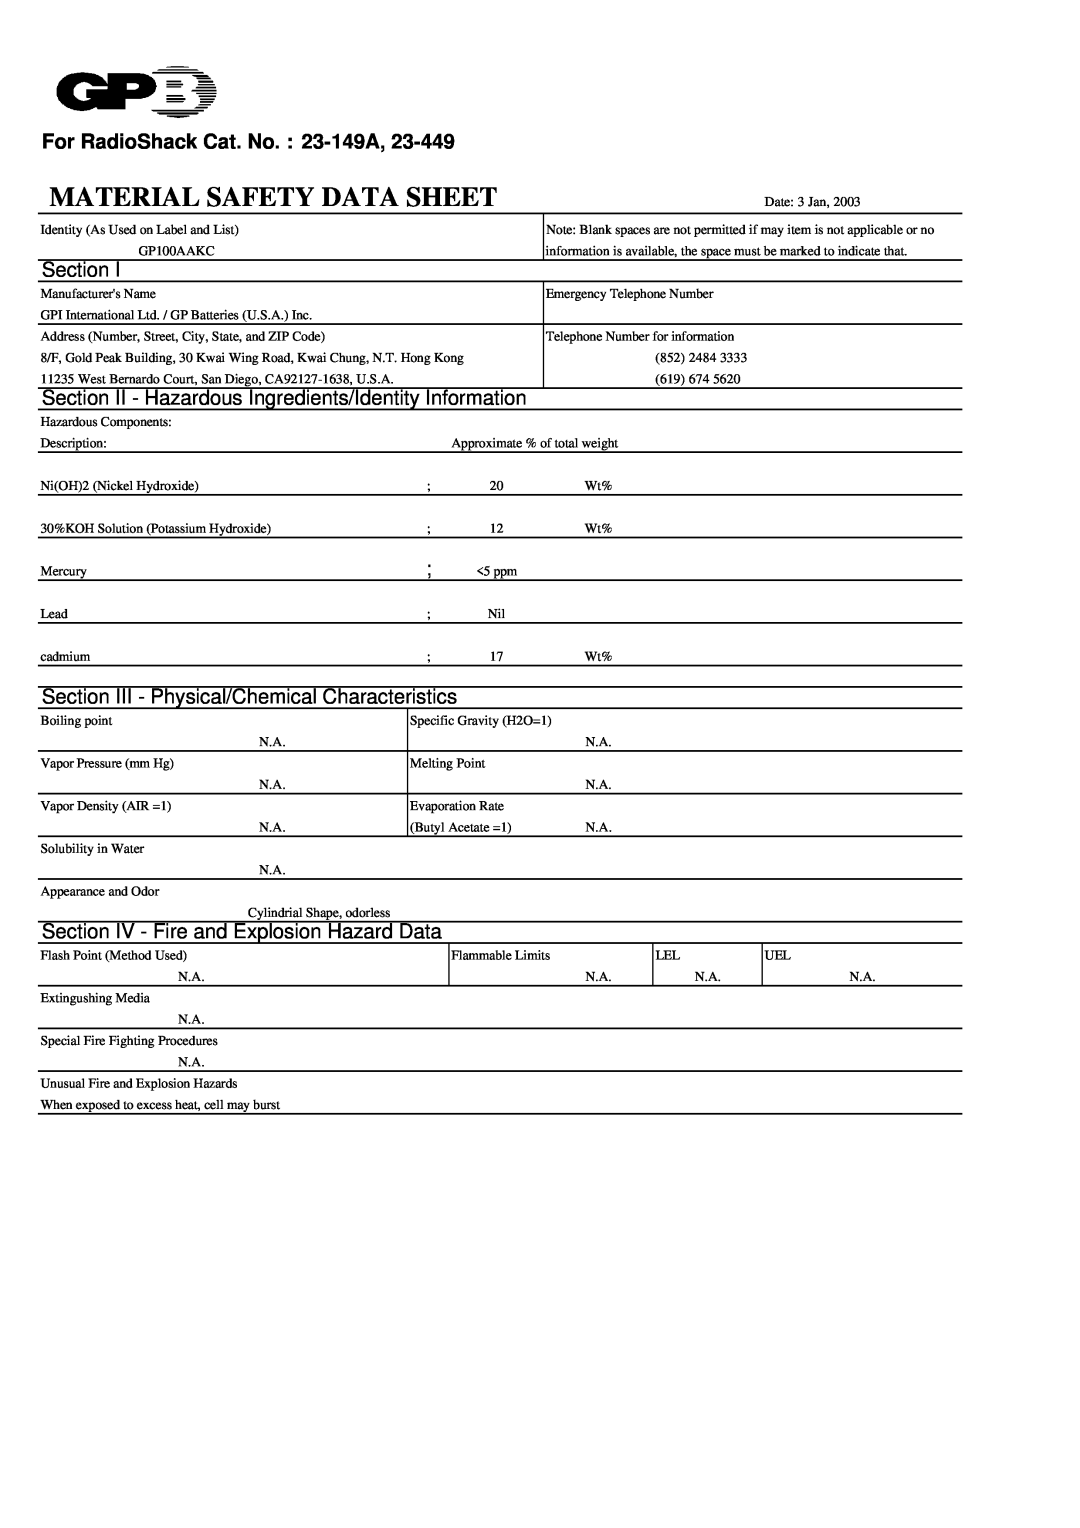 Radio Shack 23-449, 23-154 manual Section II - Hazardous Ingredients/Identity Information, Material Safety Data Sheet 